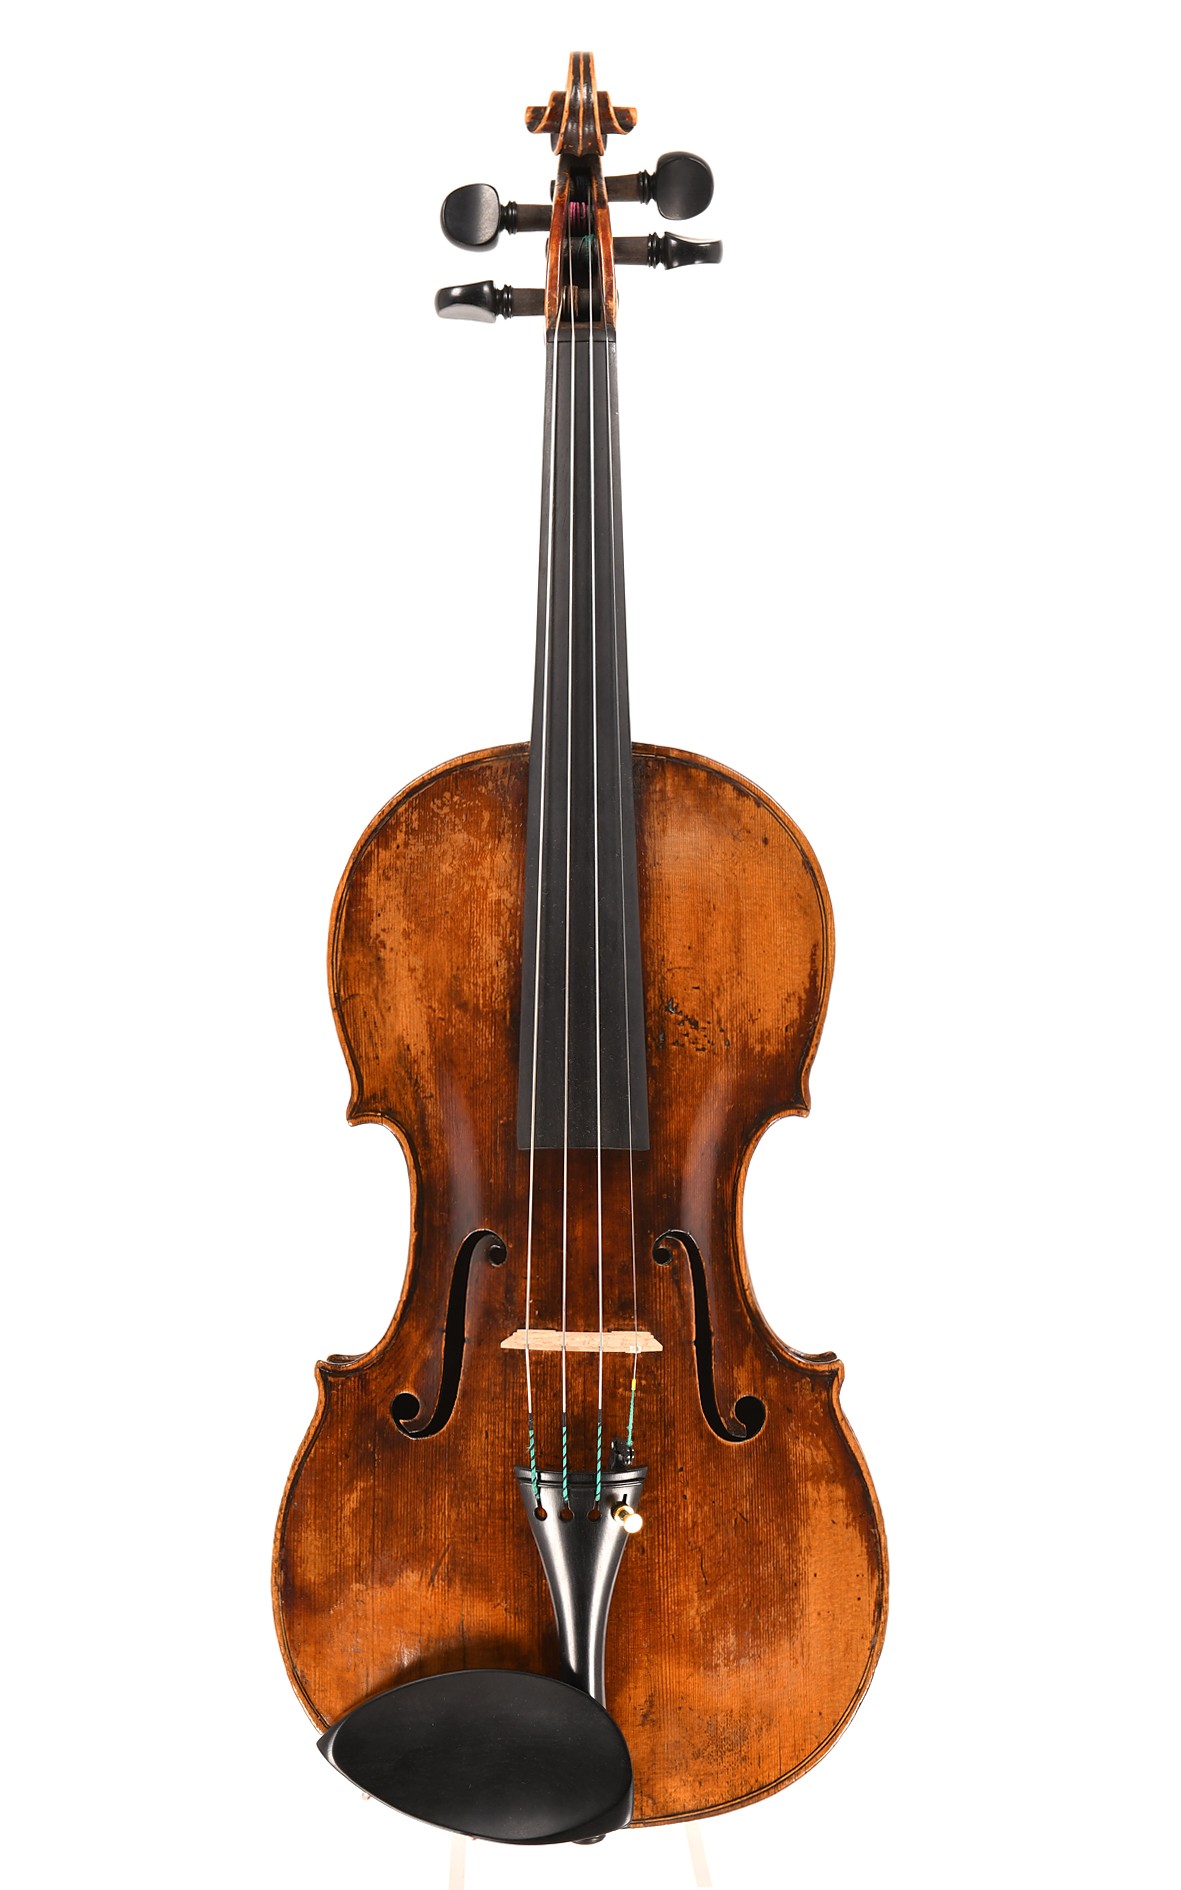 Fine century violin of the Thir school, circa 1750